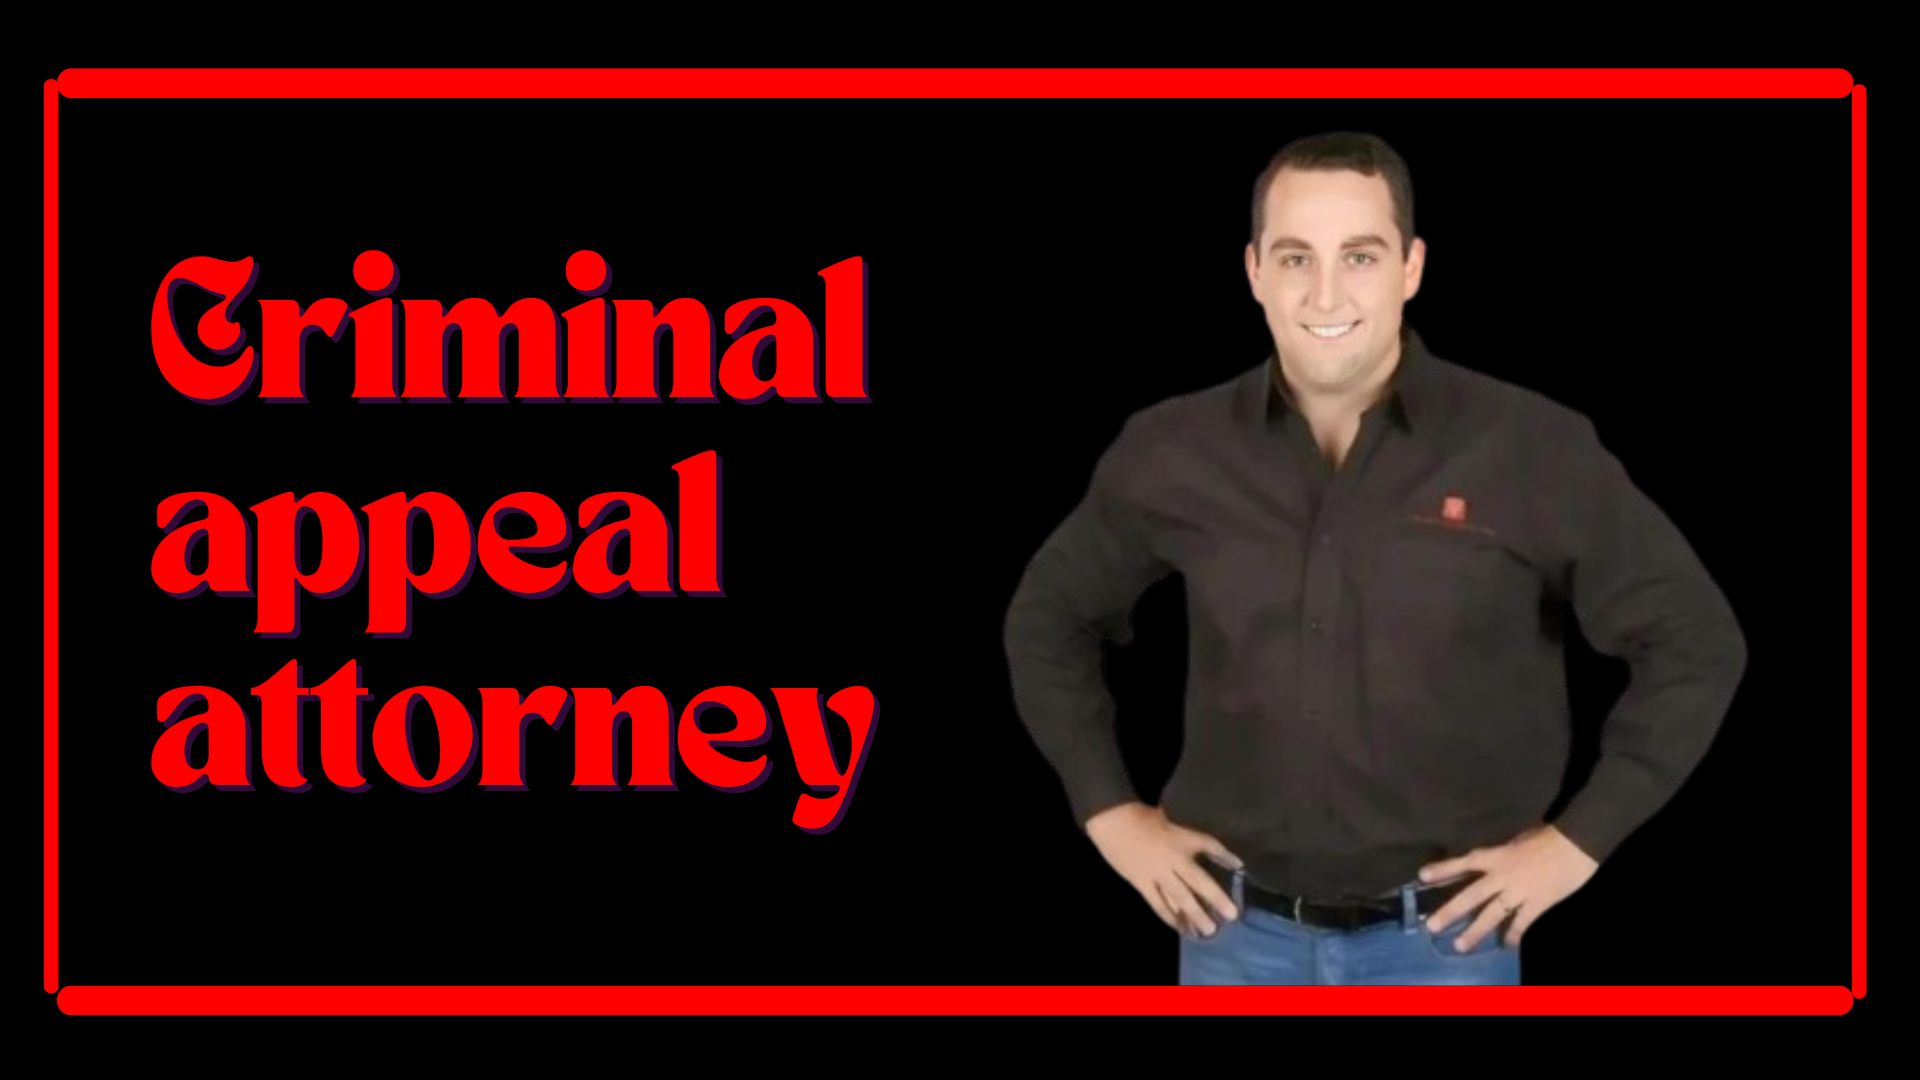 Criminal appeals attorney